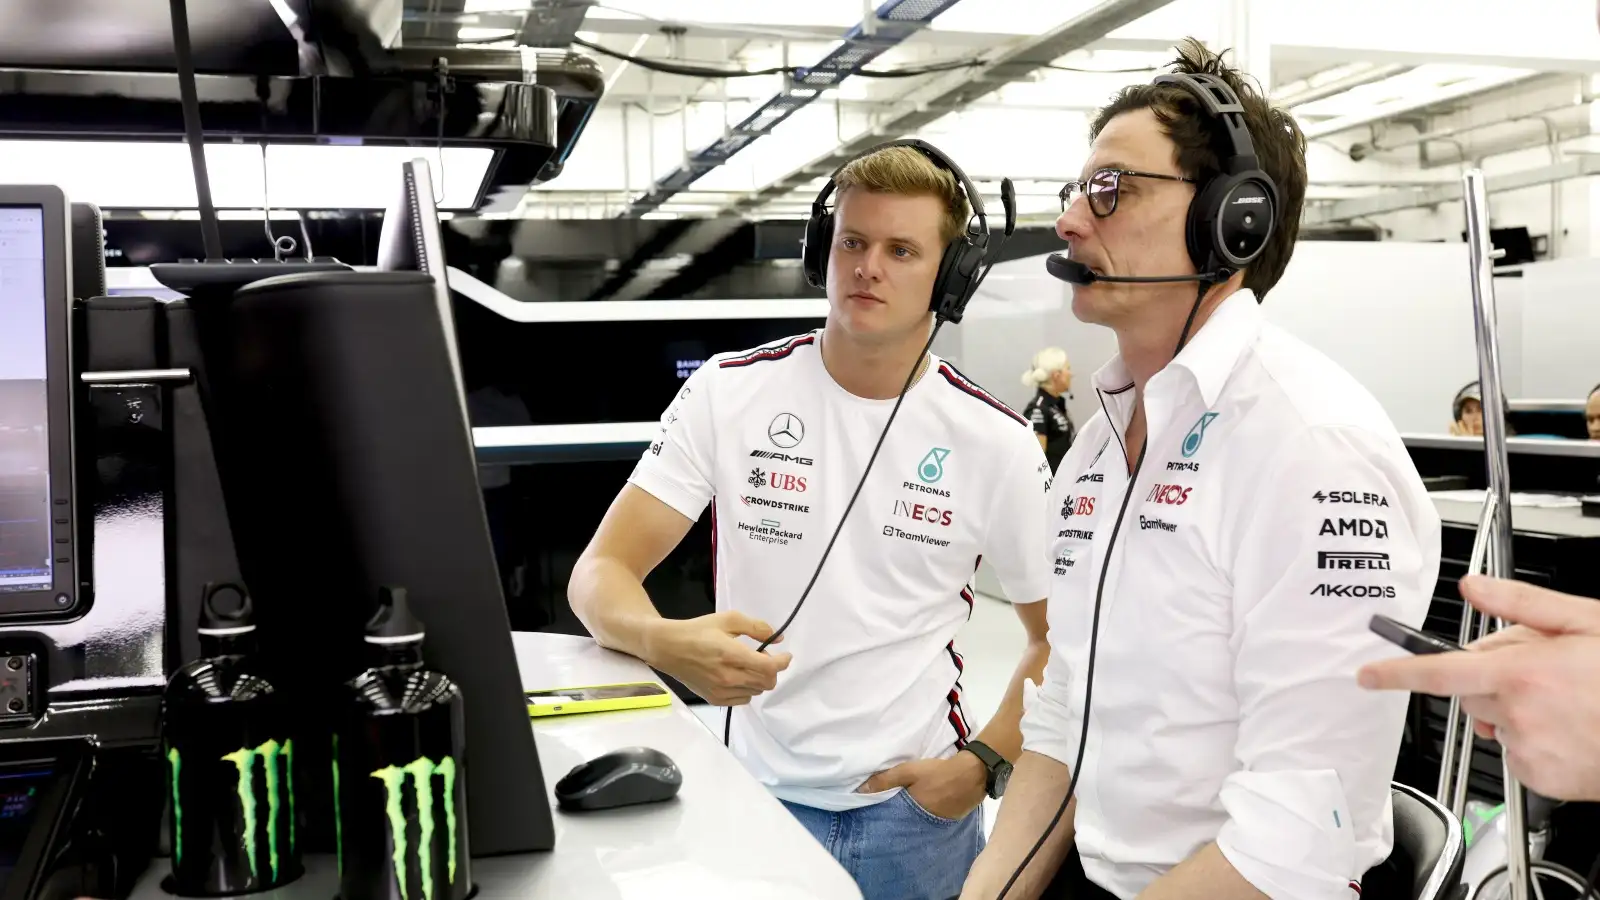 Mick Schumacher F1 return rumoured with both Alpine drivers’ future uncertain – report